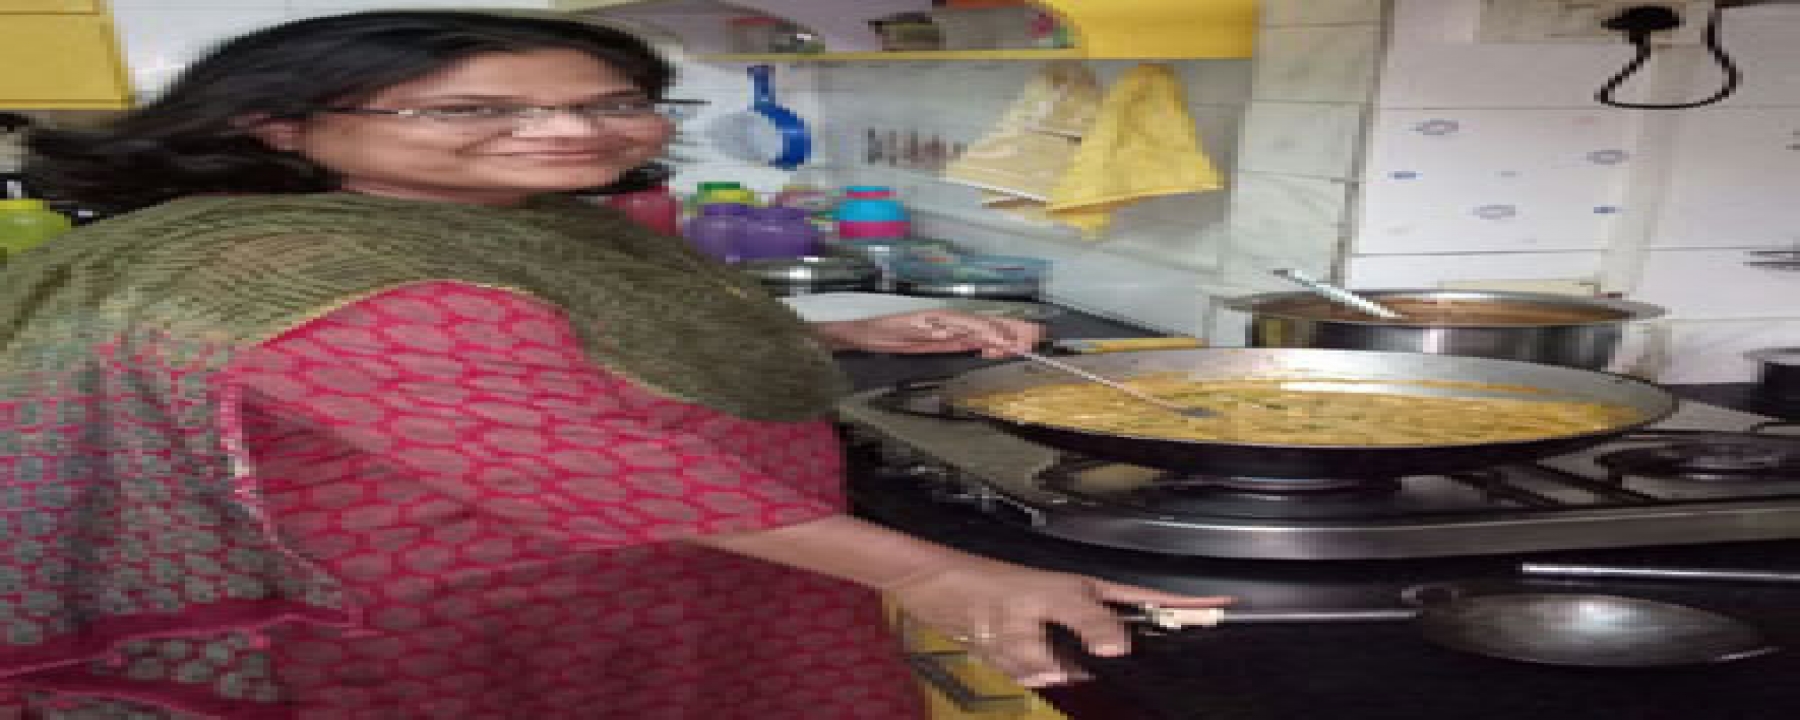 Pam's kitchen Ghar ka khana